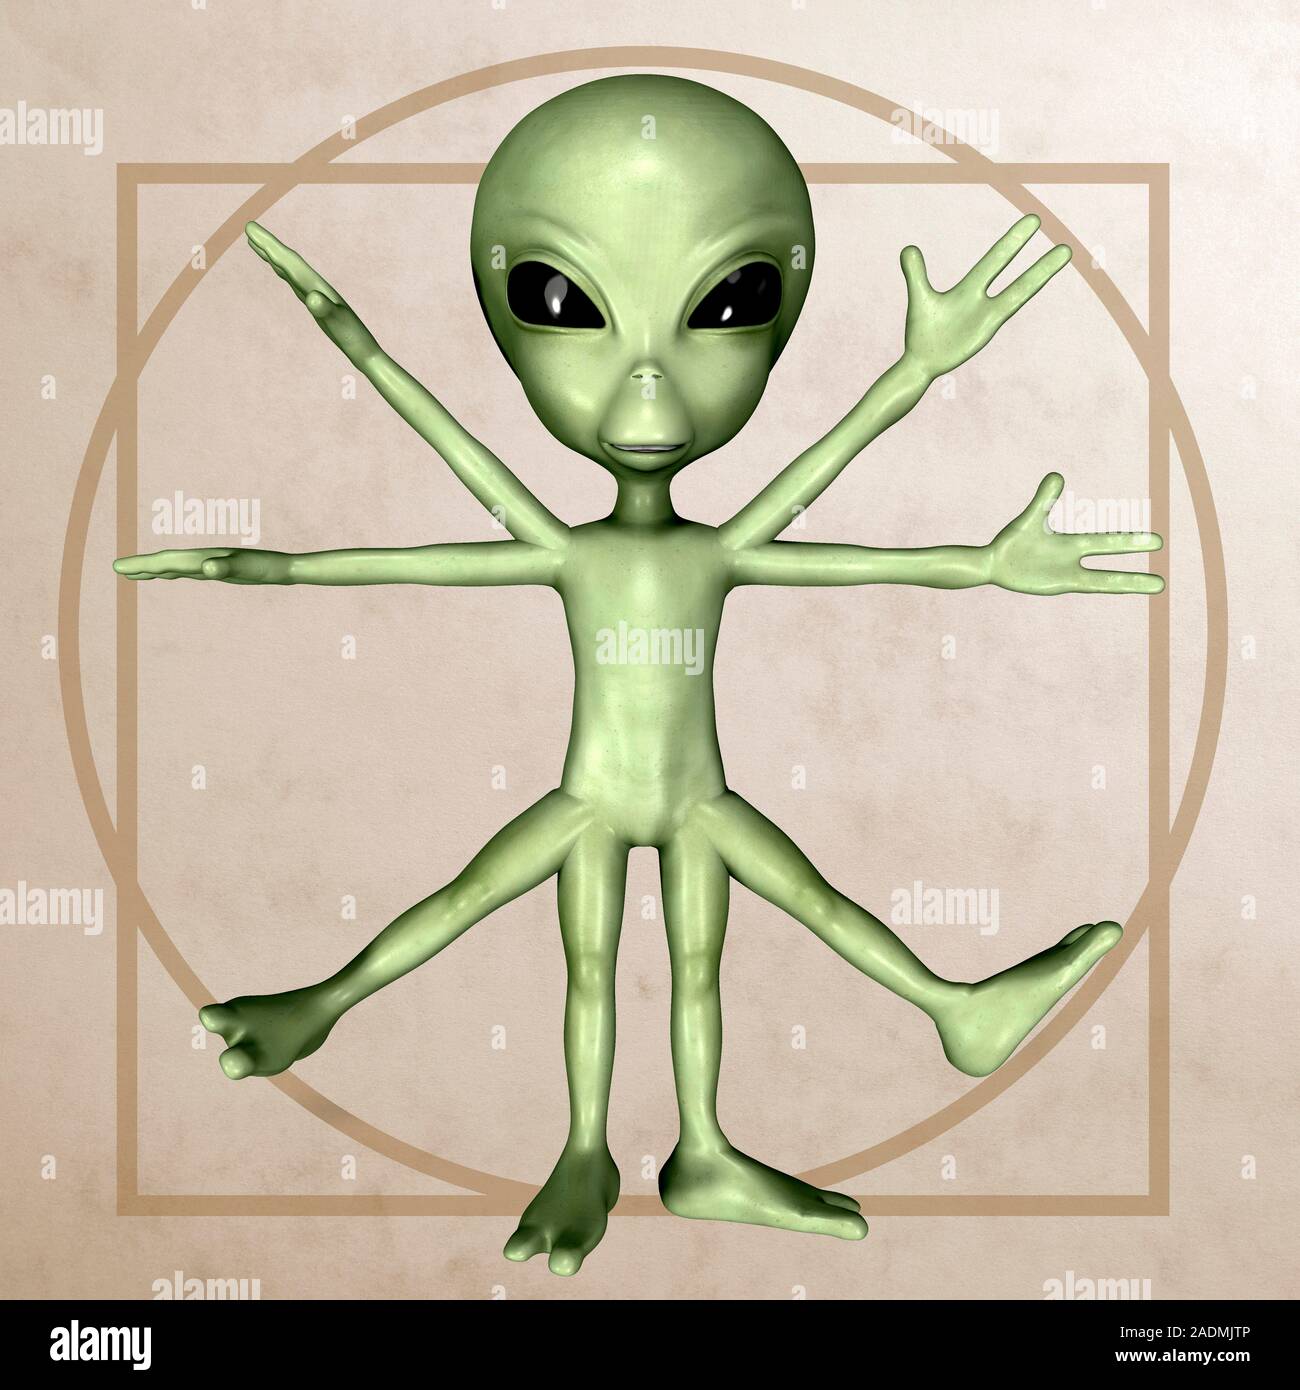 Alien. Computer artwork of an alien life form based on Italian artist Leonardo da Vinci's Vitruvian Man (circa 1492). Stock Photo